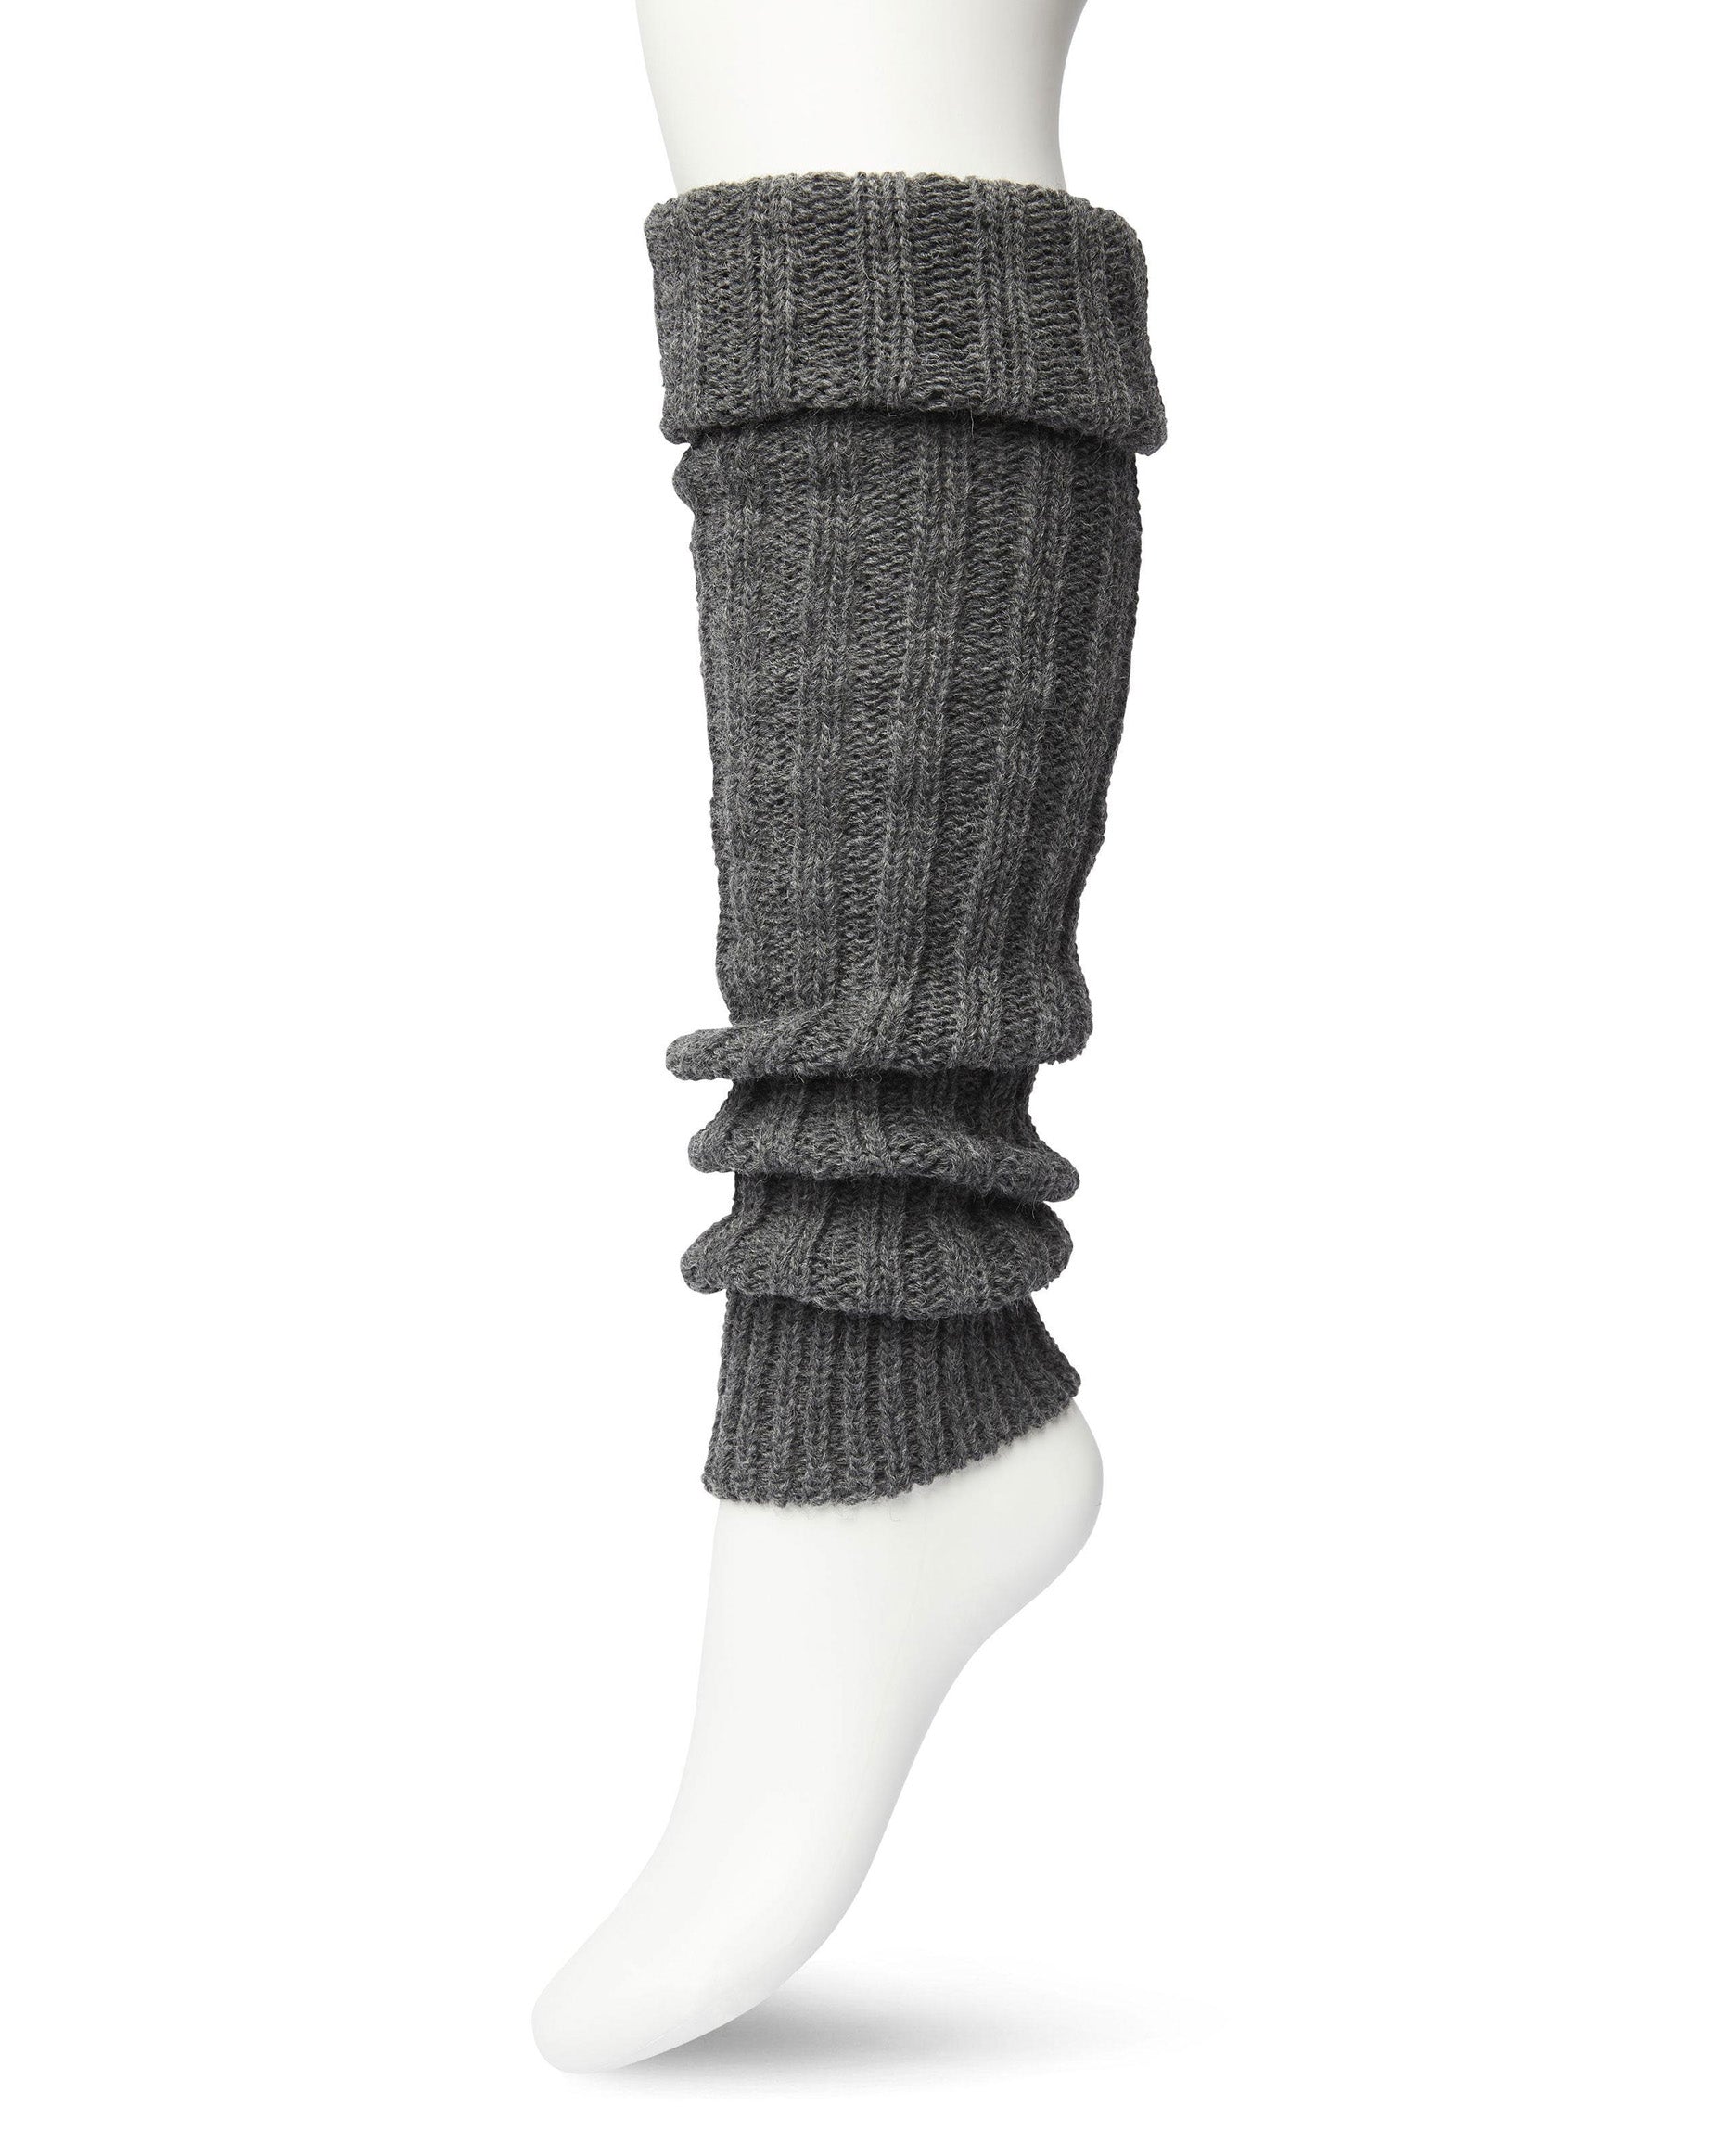 Bonnie Doon Sleever/Legwarmer BE021766 - grey wool mix chunky knitted leg warmers